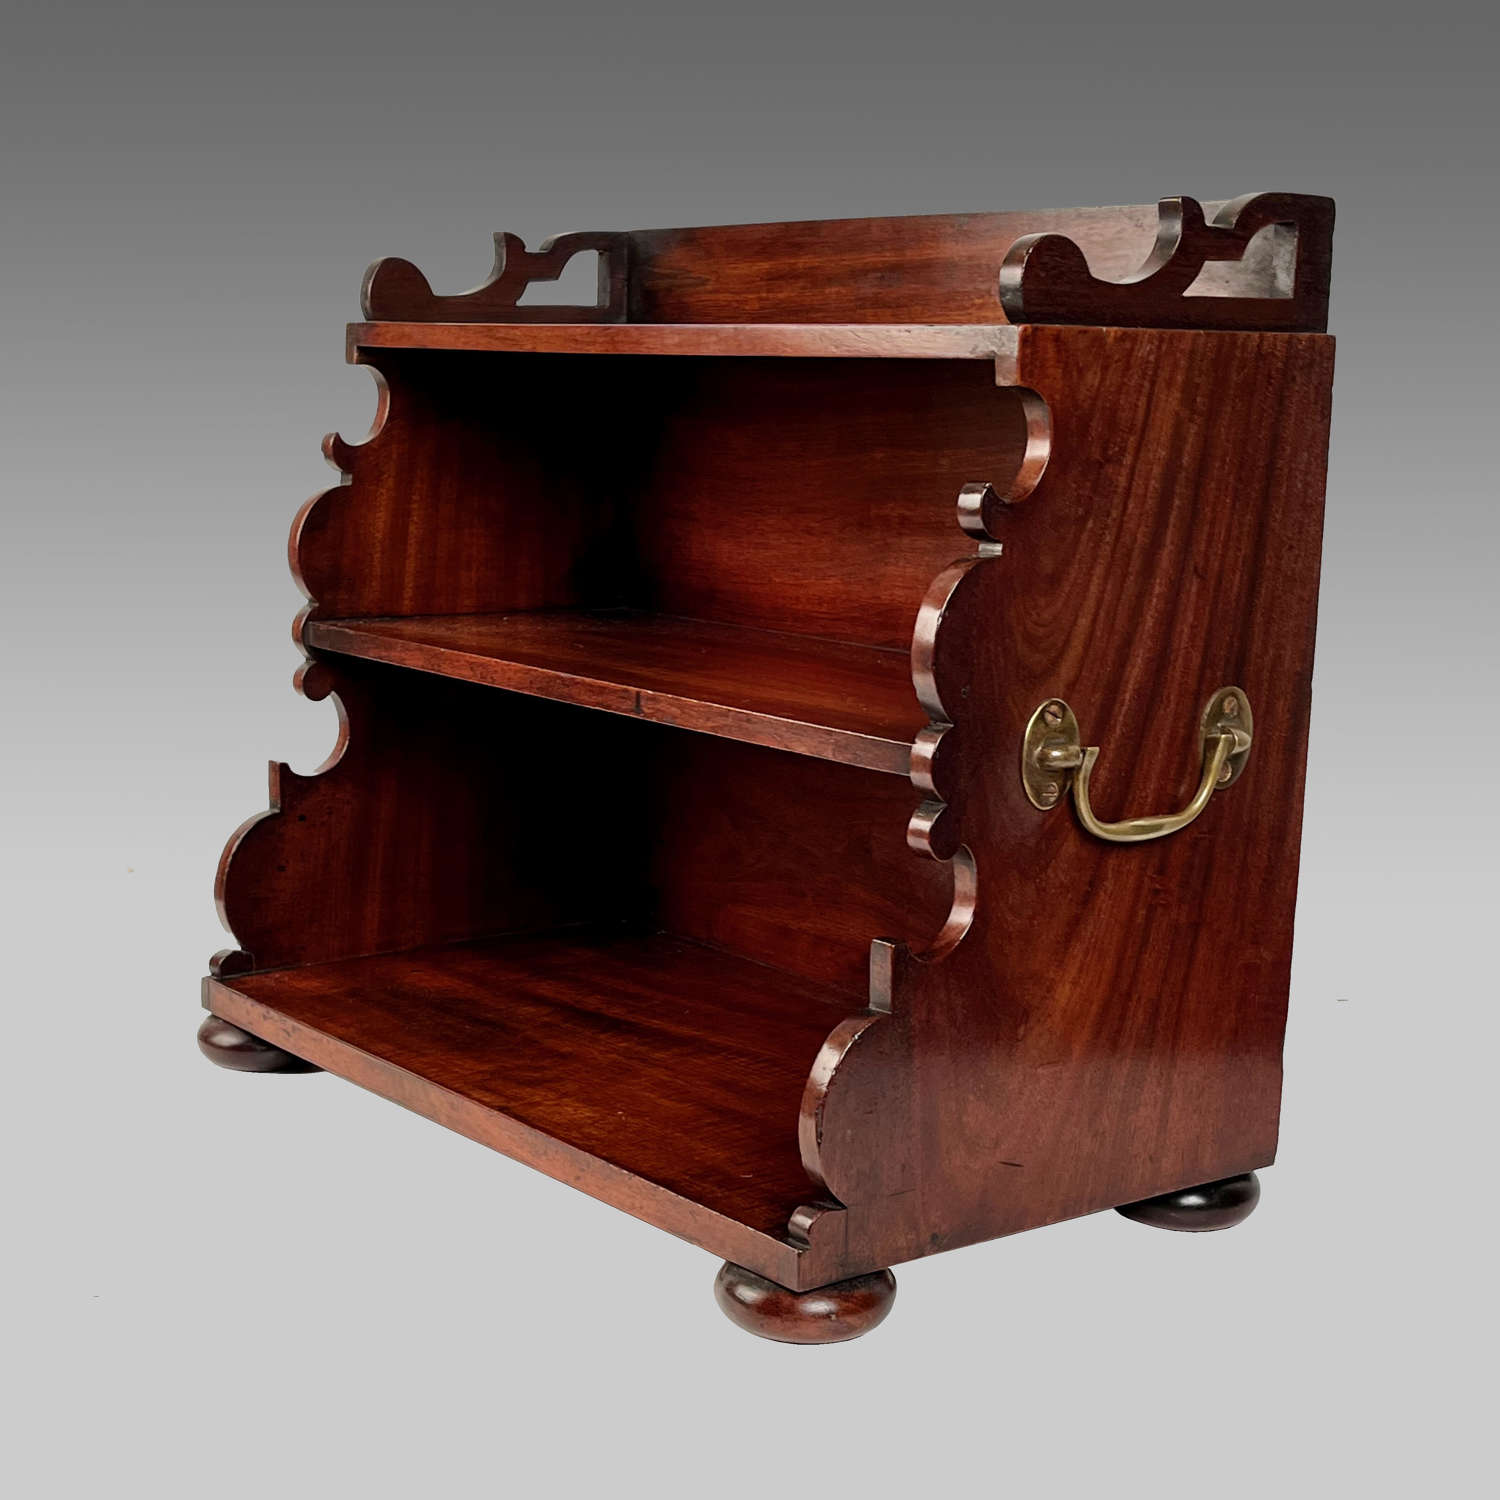 Regency mahogany portable whatnot or shelves